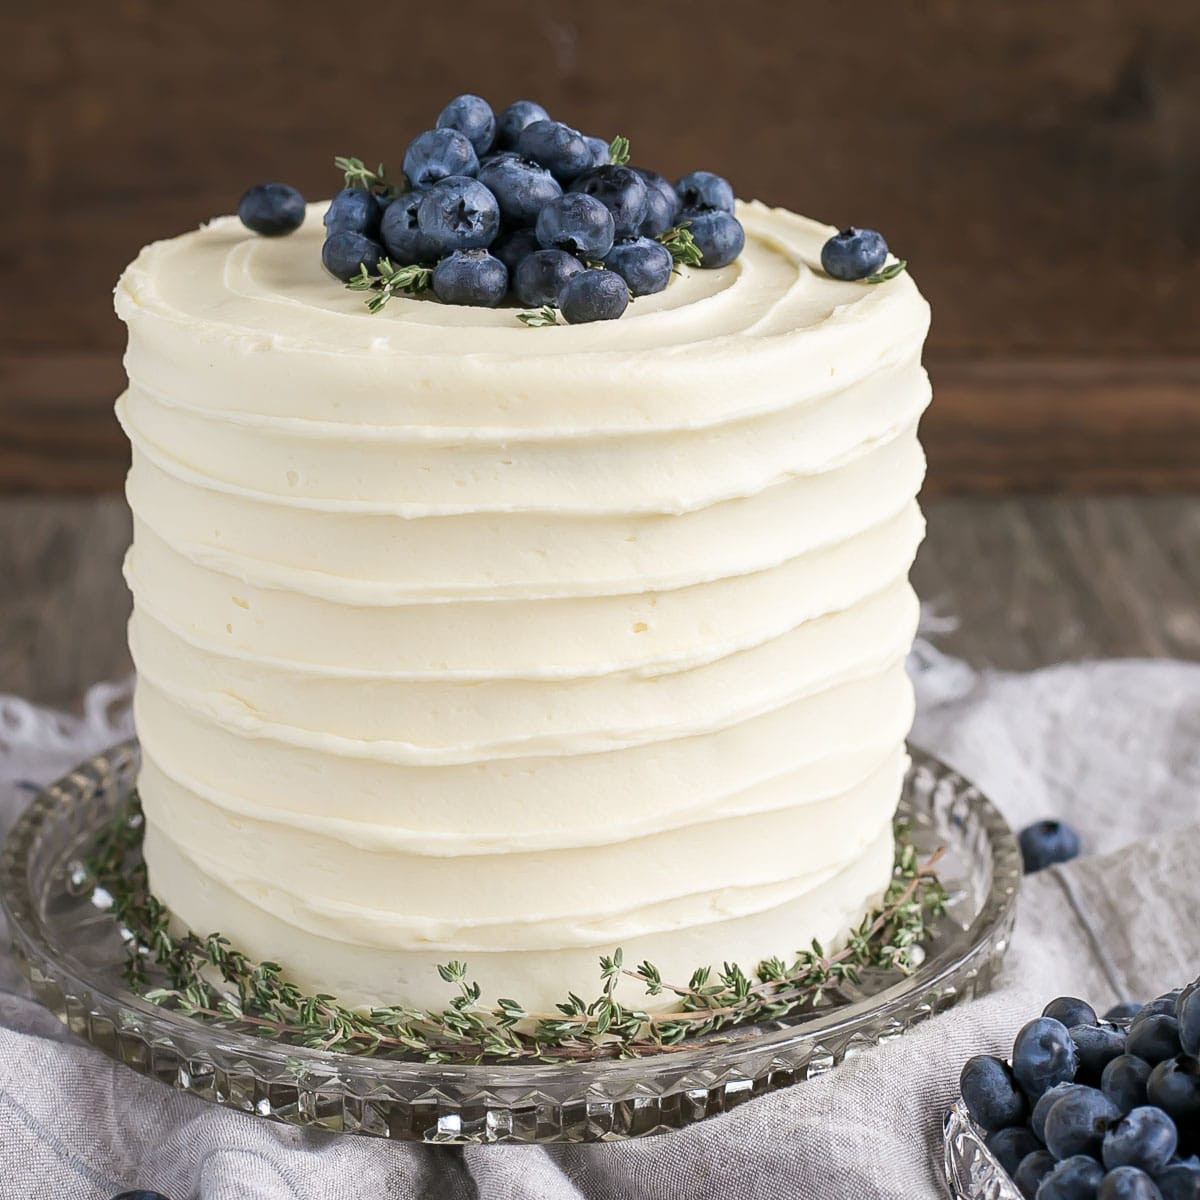 Blueberry Birthday Cake Recipe
 Blueberry Banana Cake with Cream Cheese Frosting